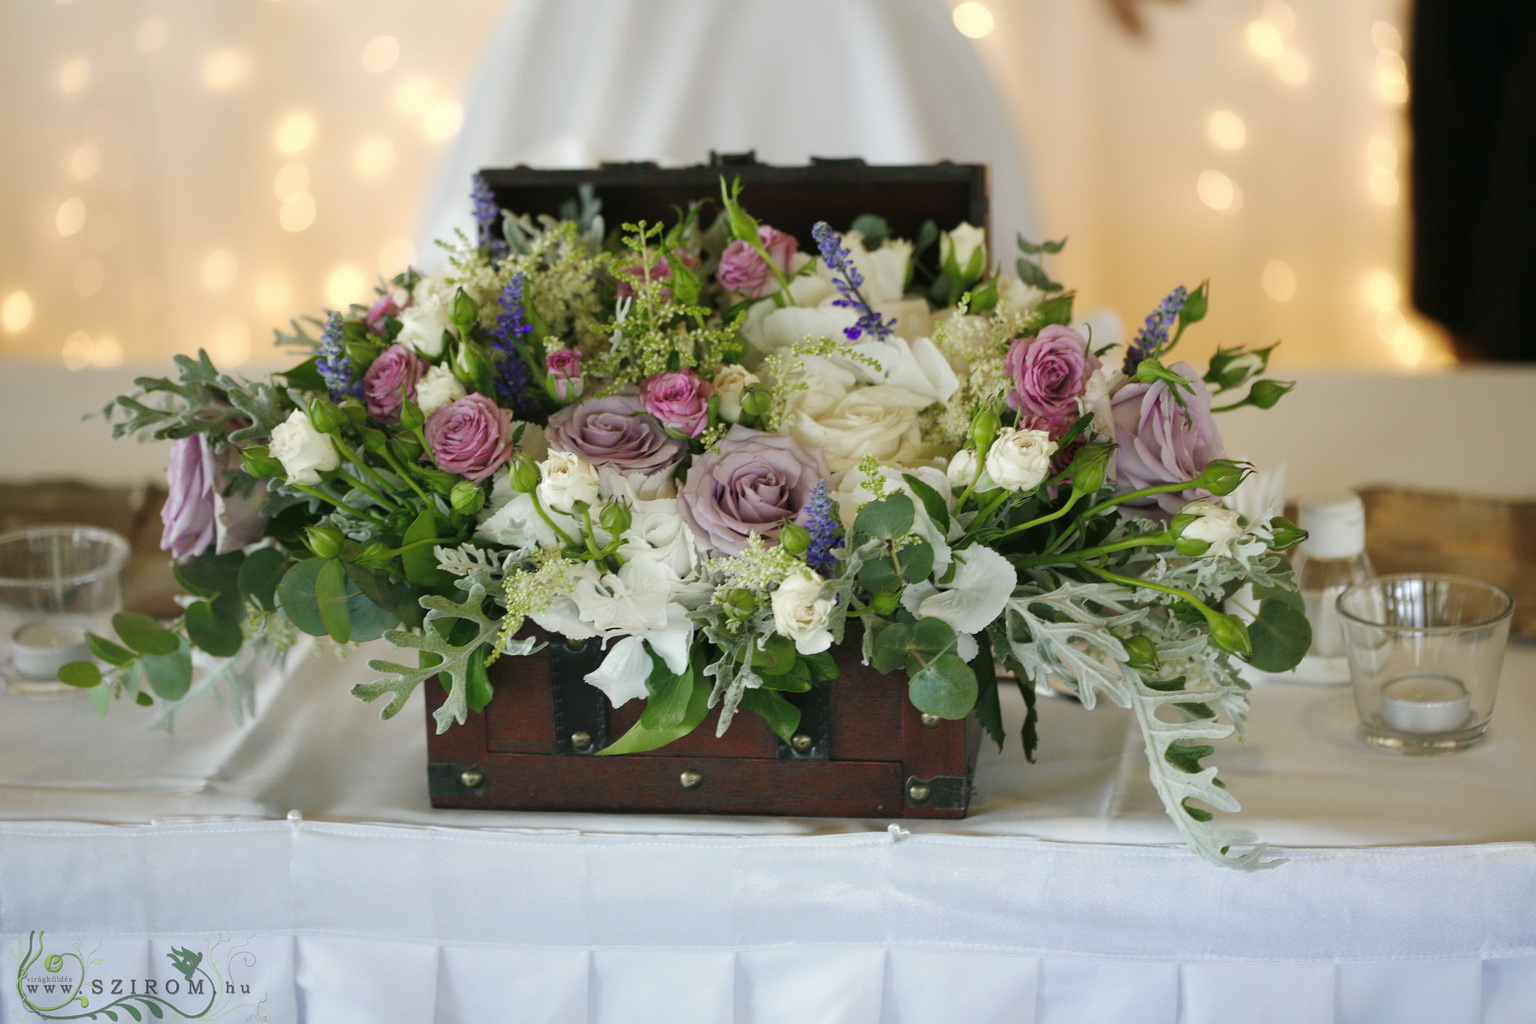 flower delivery Budapest - Main table centerpiece Bagolyvár (hydrangea, bushy rose, rose, purple, white, pink), wedding